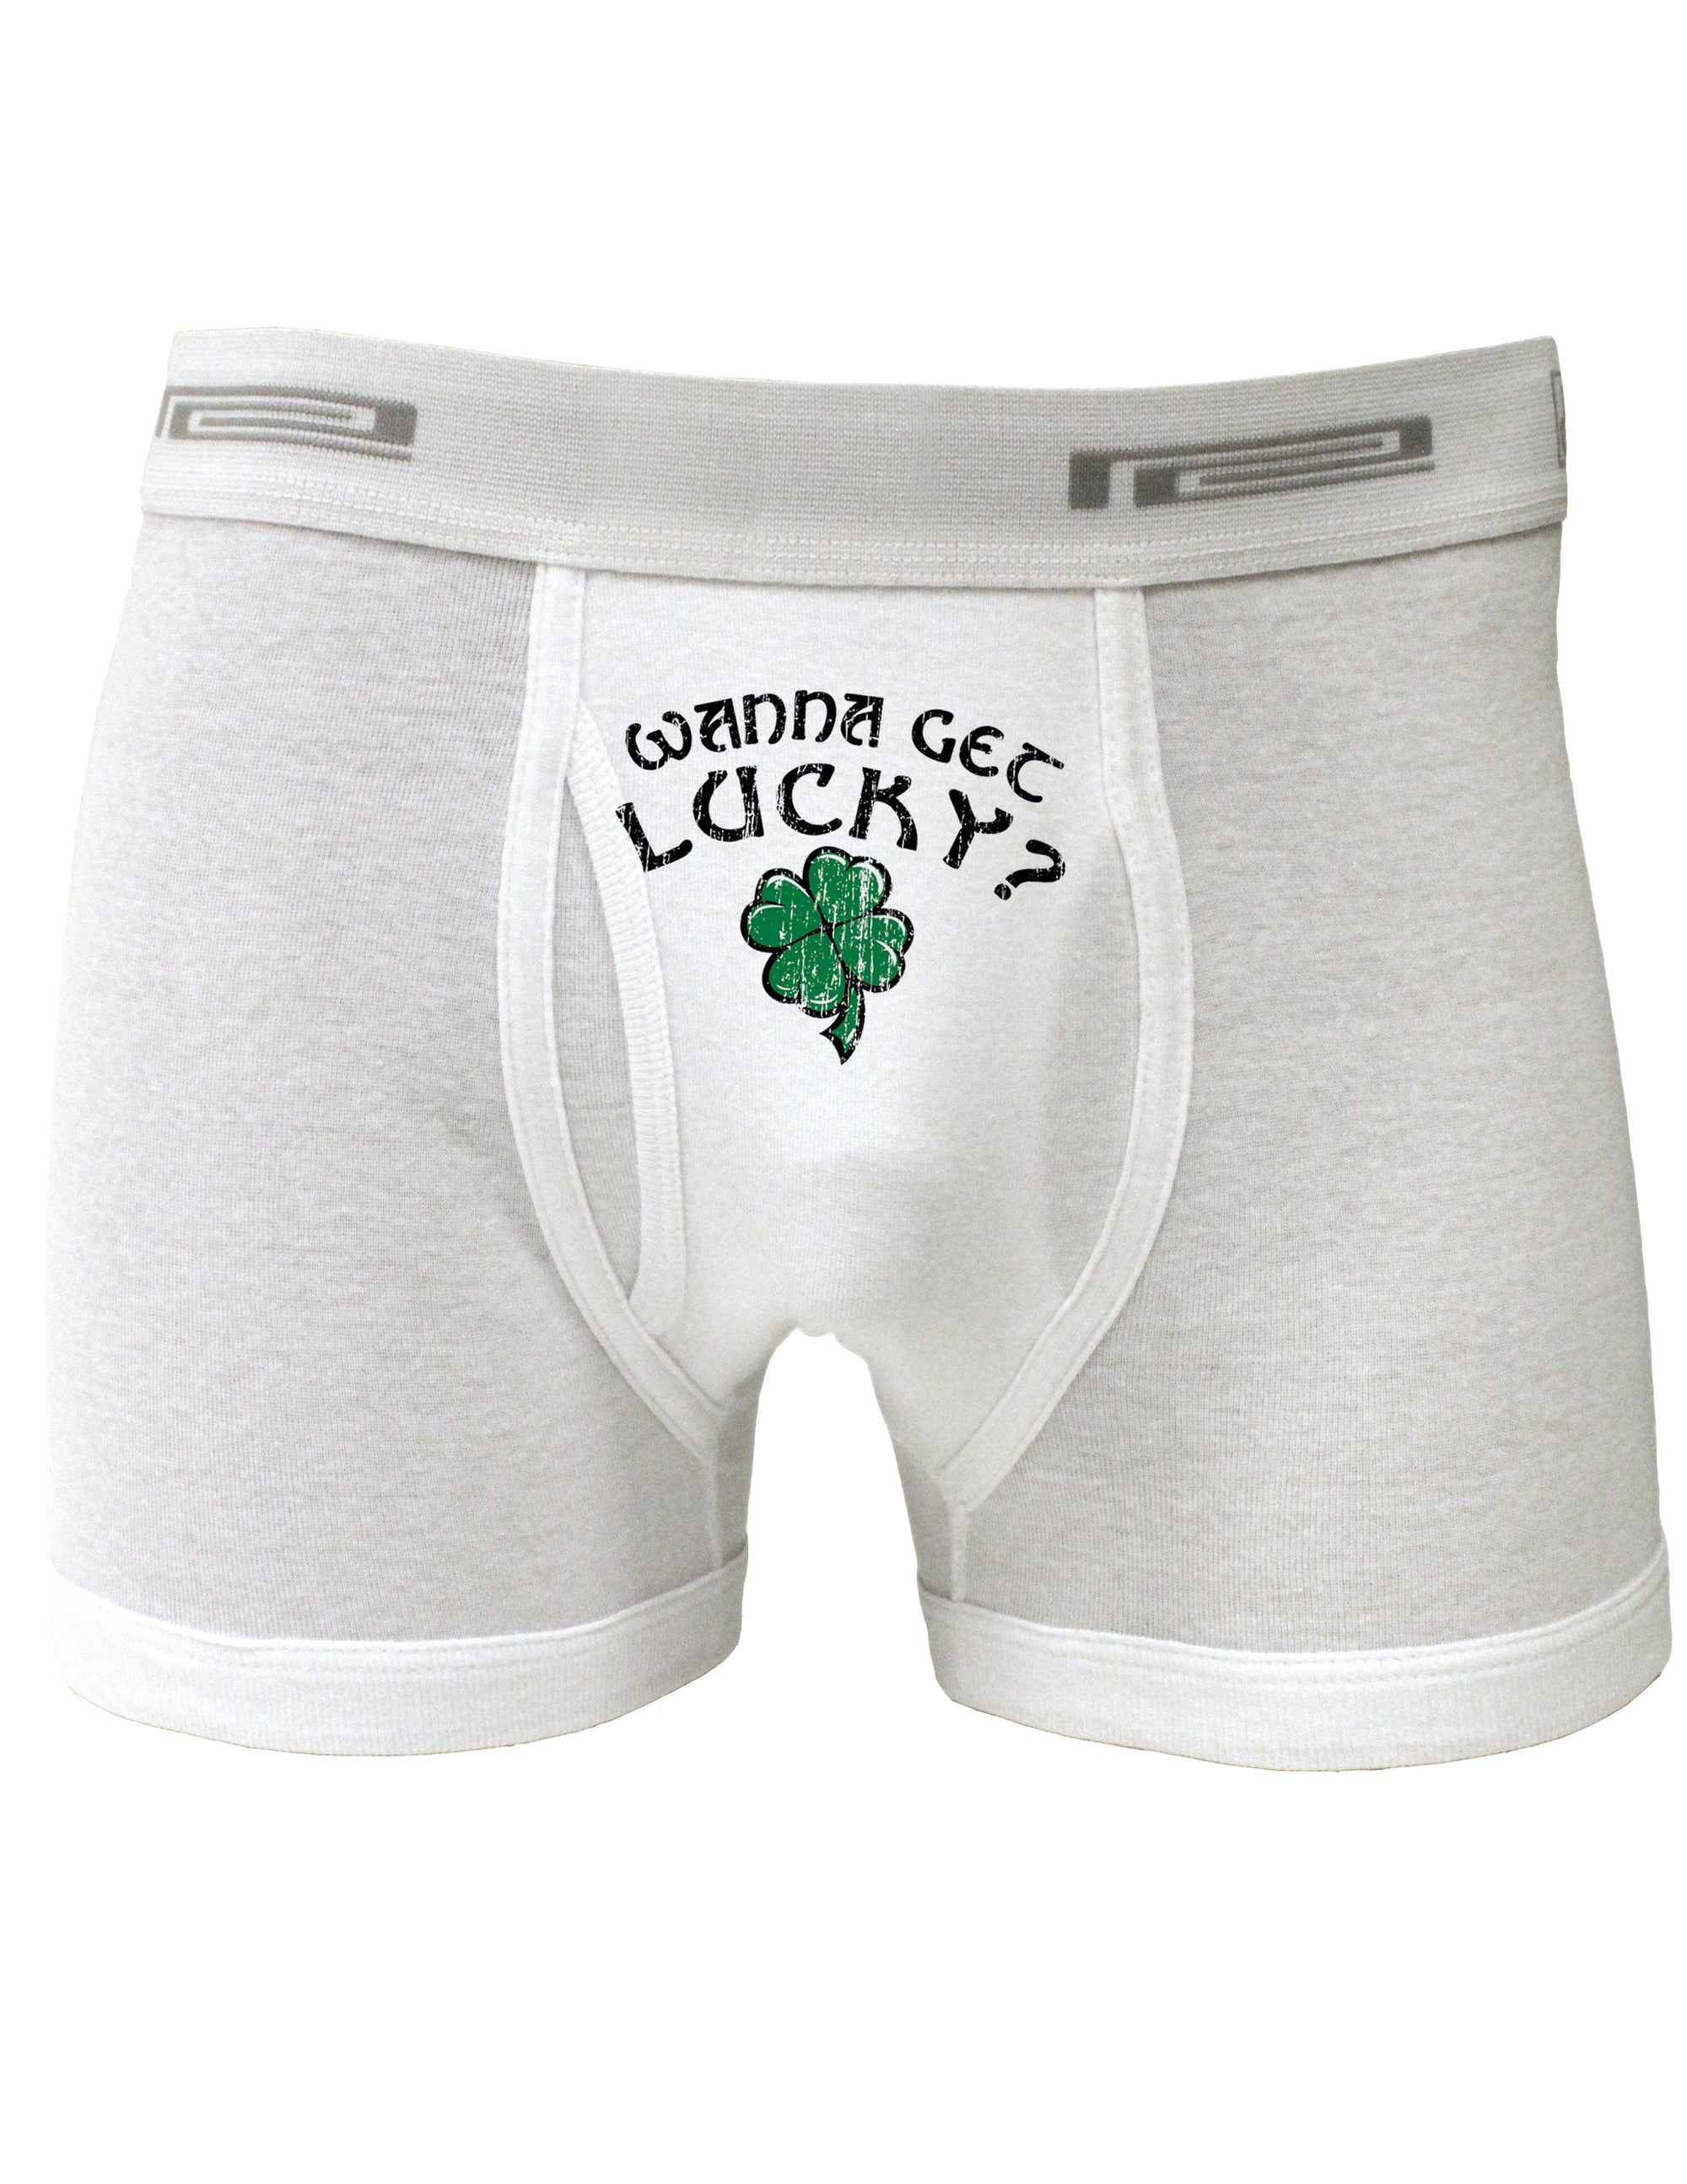 St Patricks Day Fun Men's Boxer Shorts Underwear - Choose your